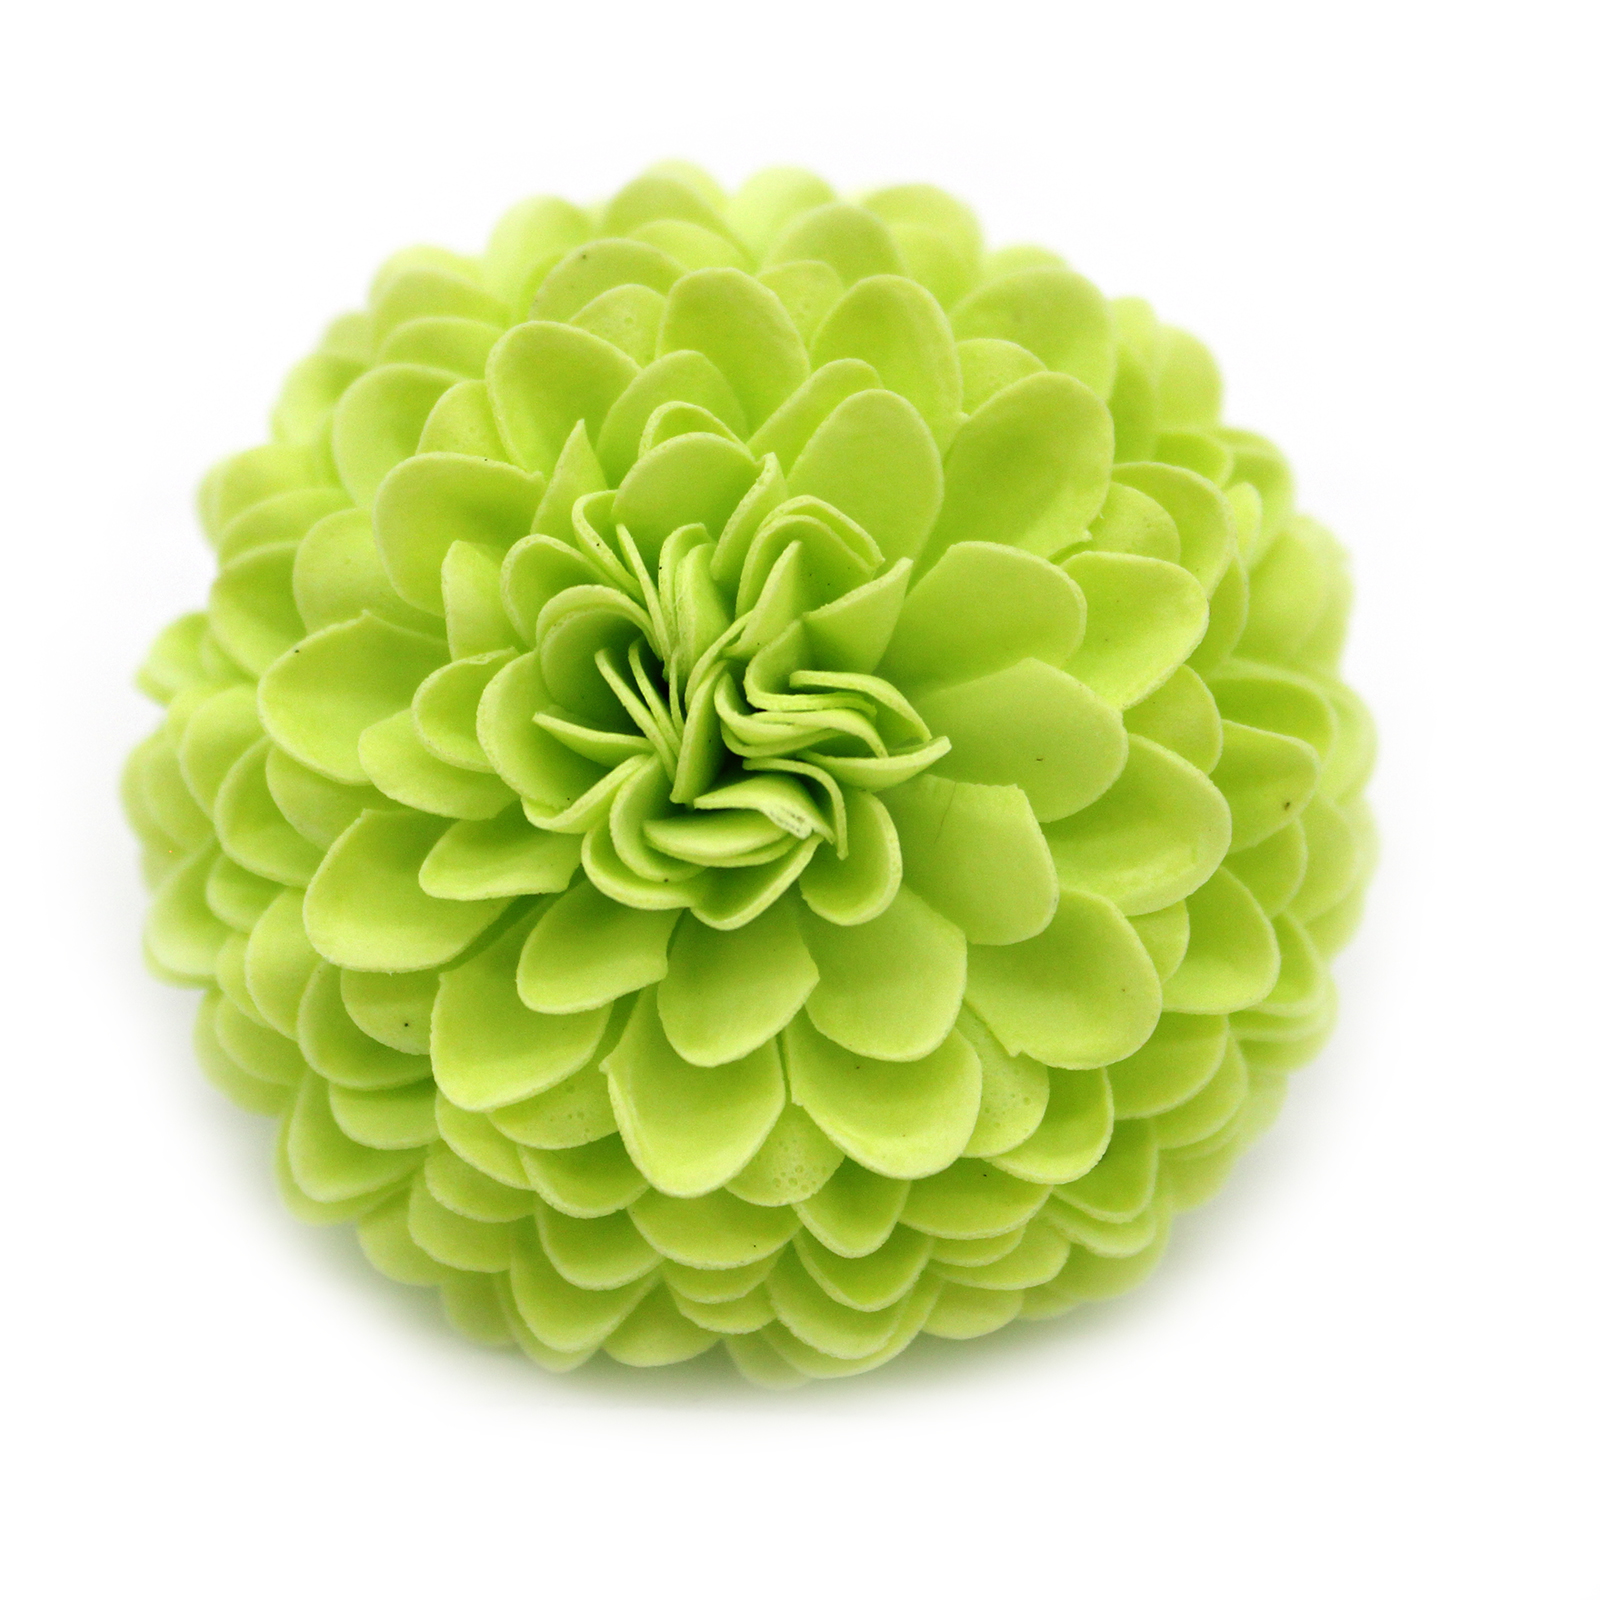 10 x Craft Soap Flowers - Small Chrysanthemum - Light Green